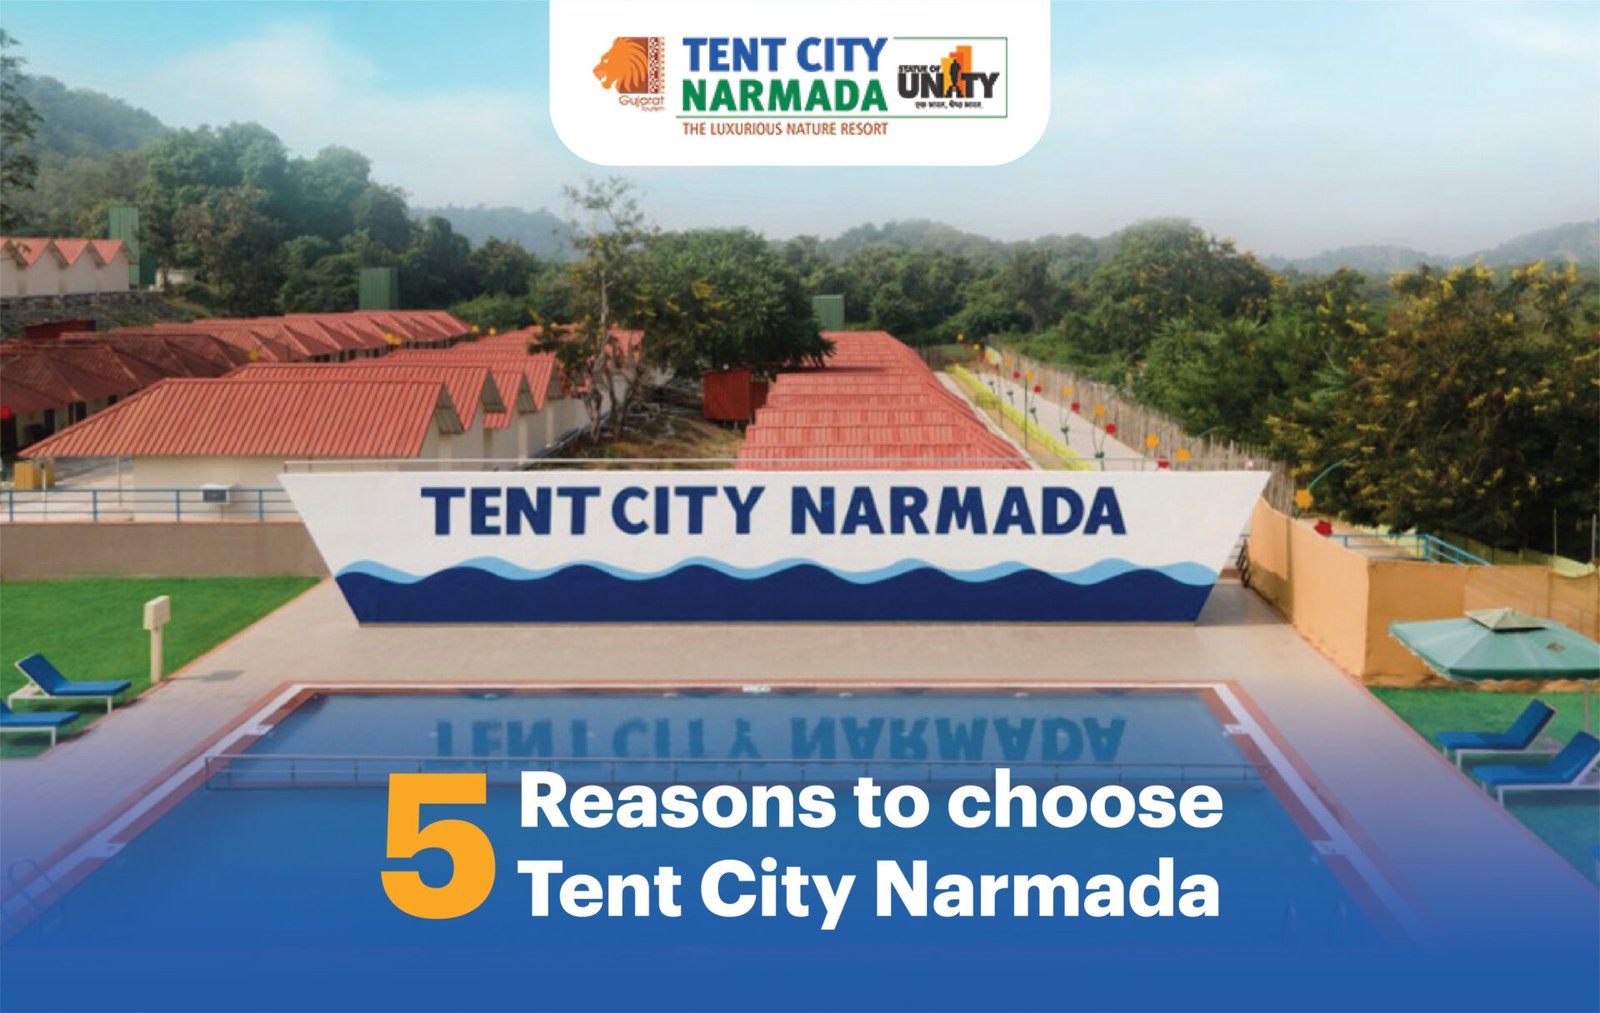 5 Reasons to choose Tent City Narmada - 2